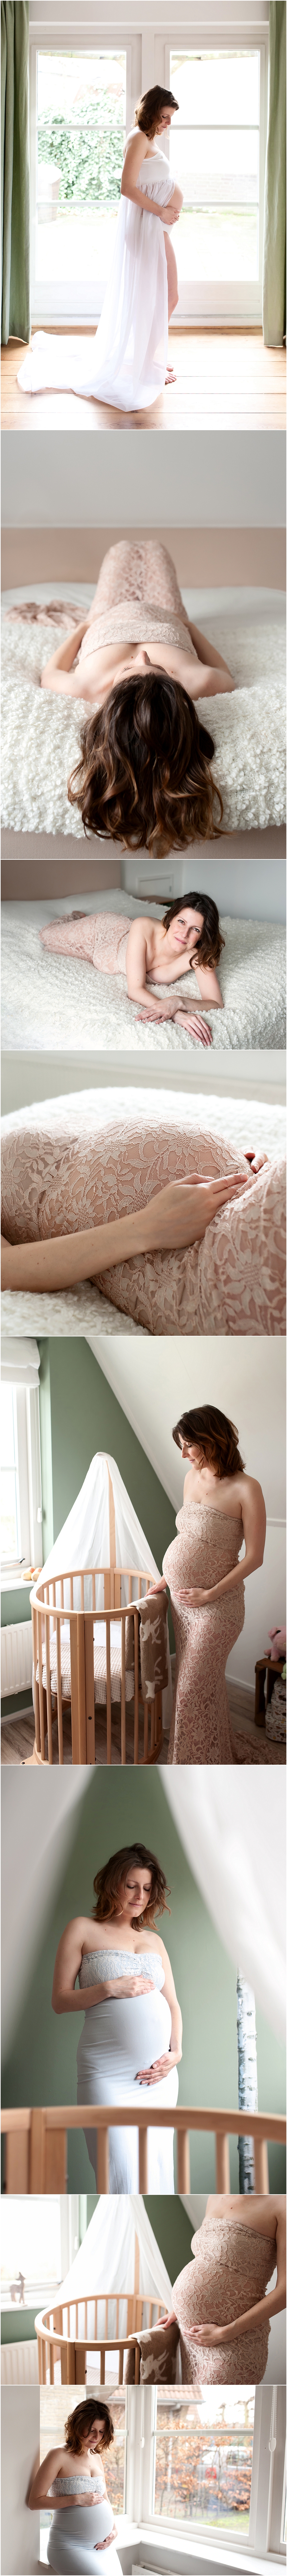 Natalie 36 weken zwanger - Zwanger fotoshoot Maurik